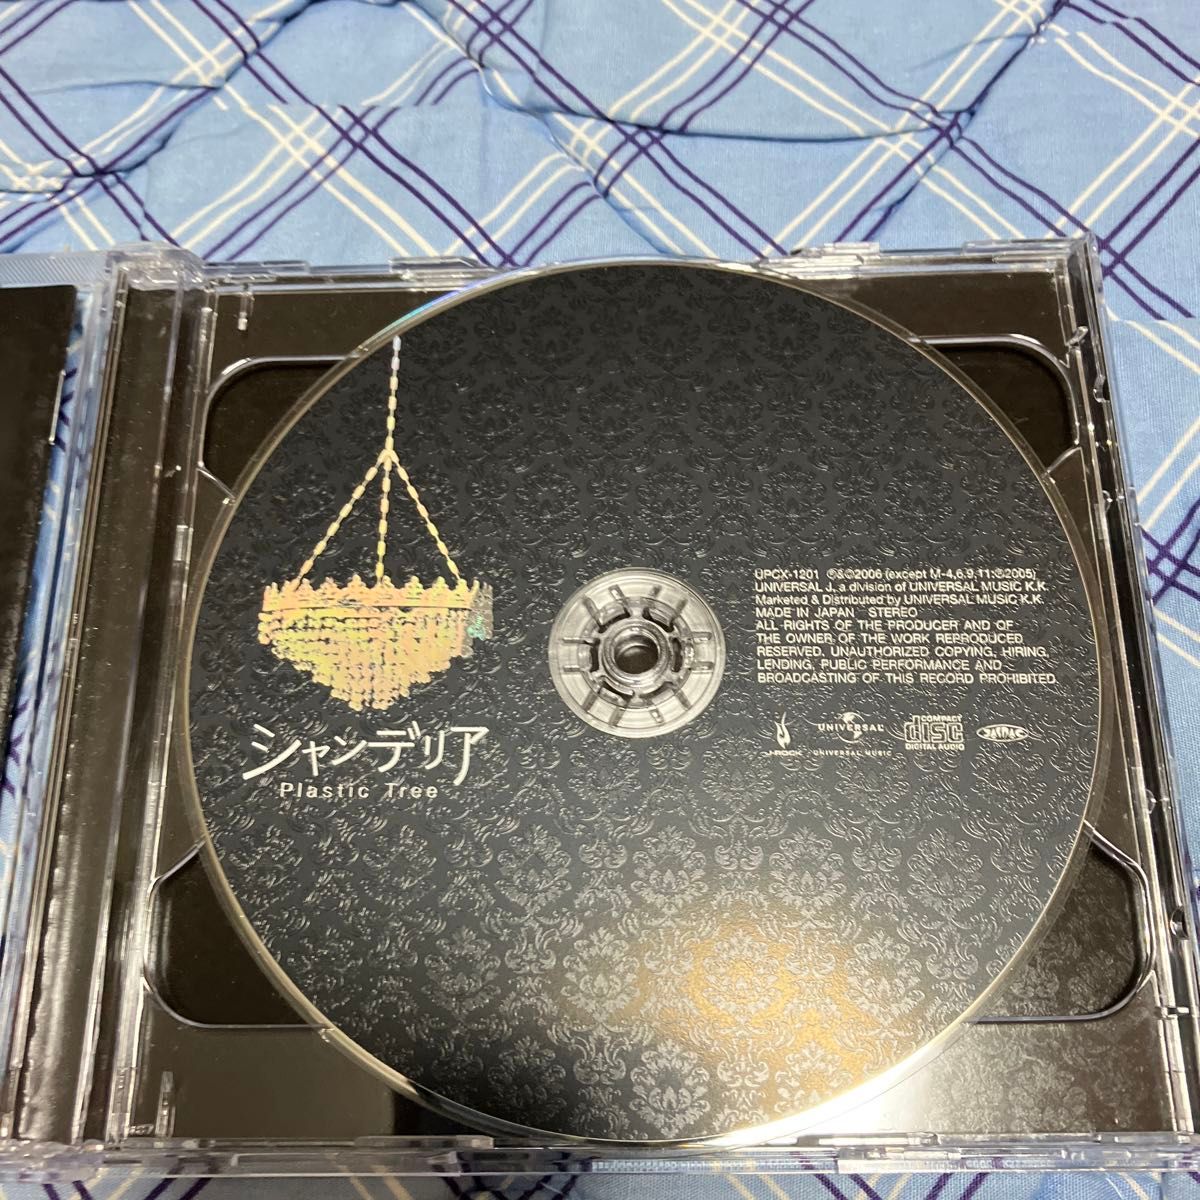 Plastic Tree シャンデリア　帯付き(初回限定盤)(DVD付)